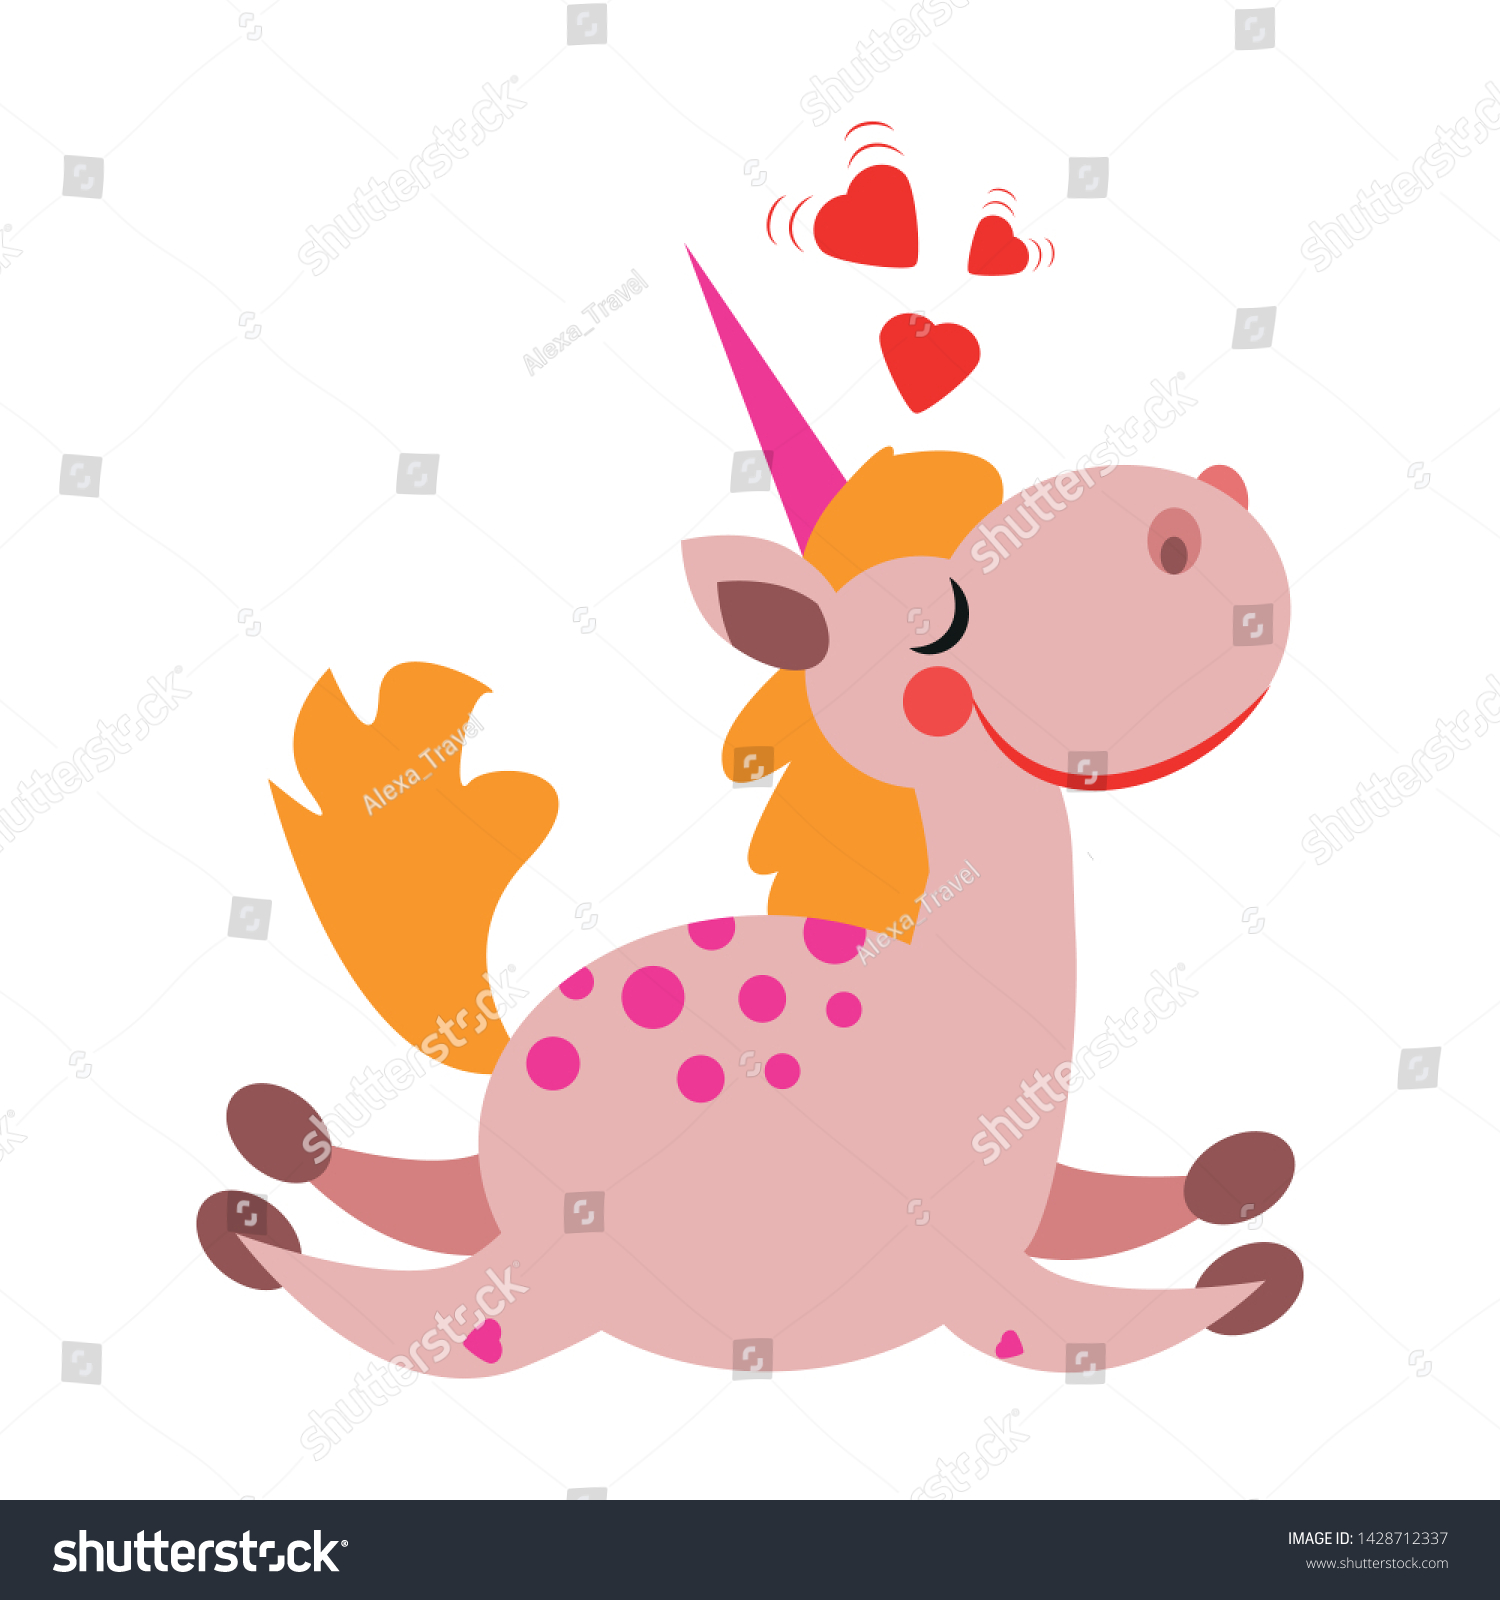 Cute Funny Cartoon Unicorn Heart Signs Stock Vector Royalty Free 1428712337 7805